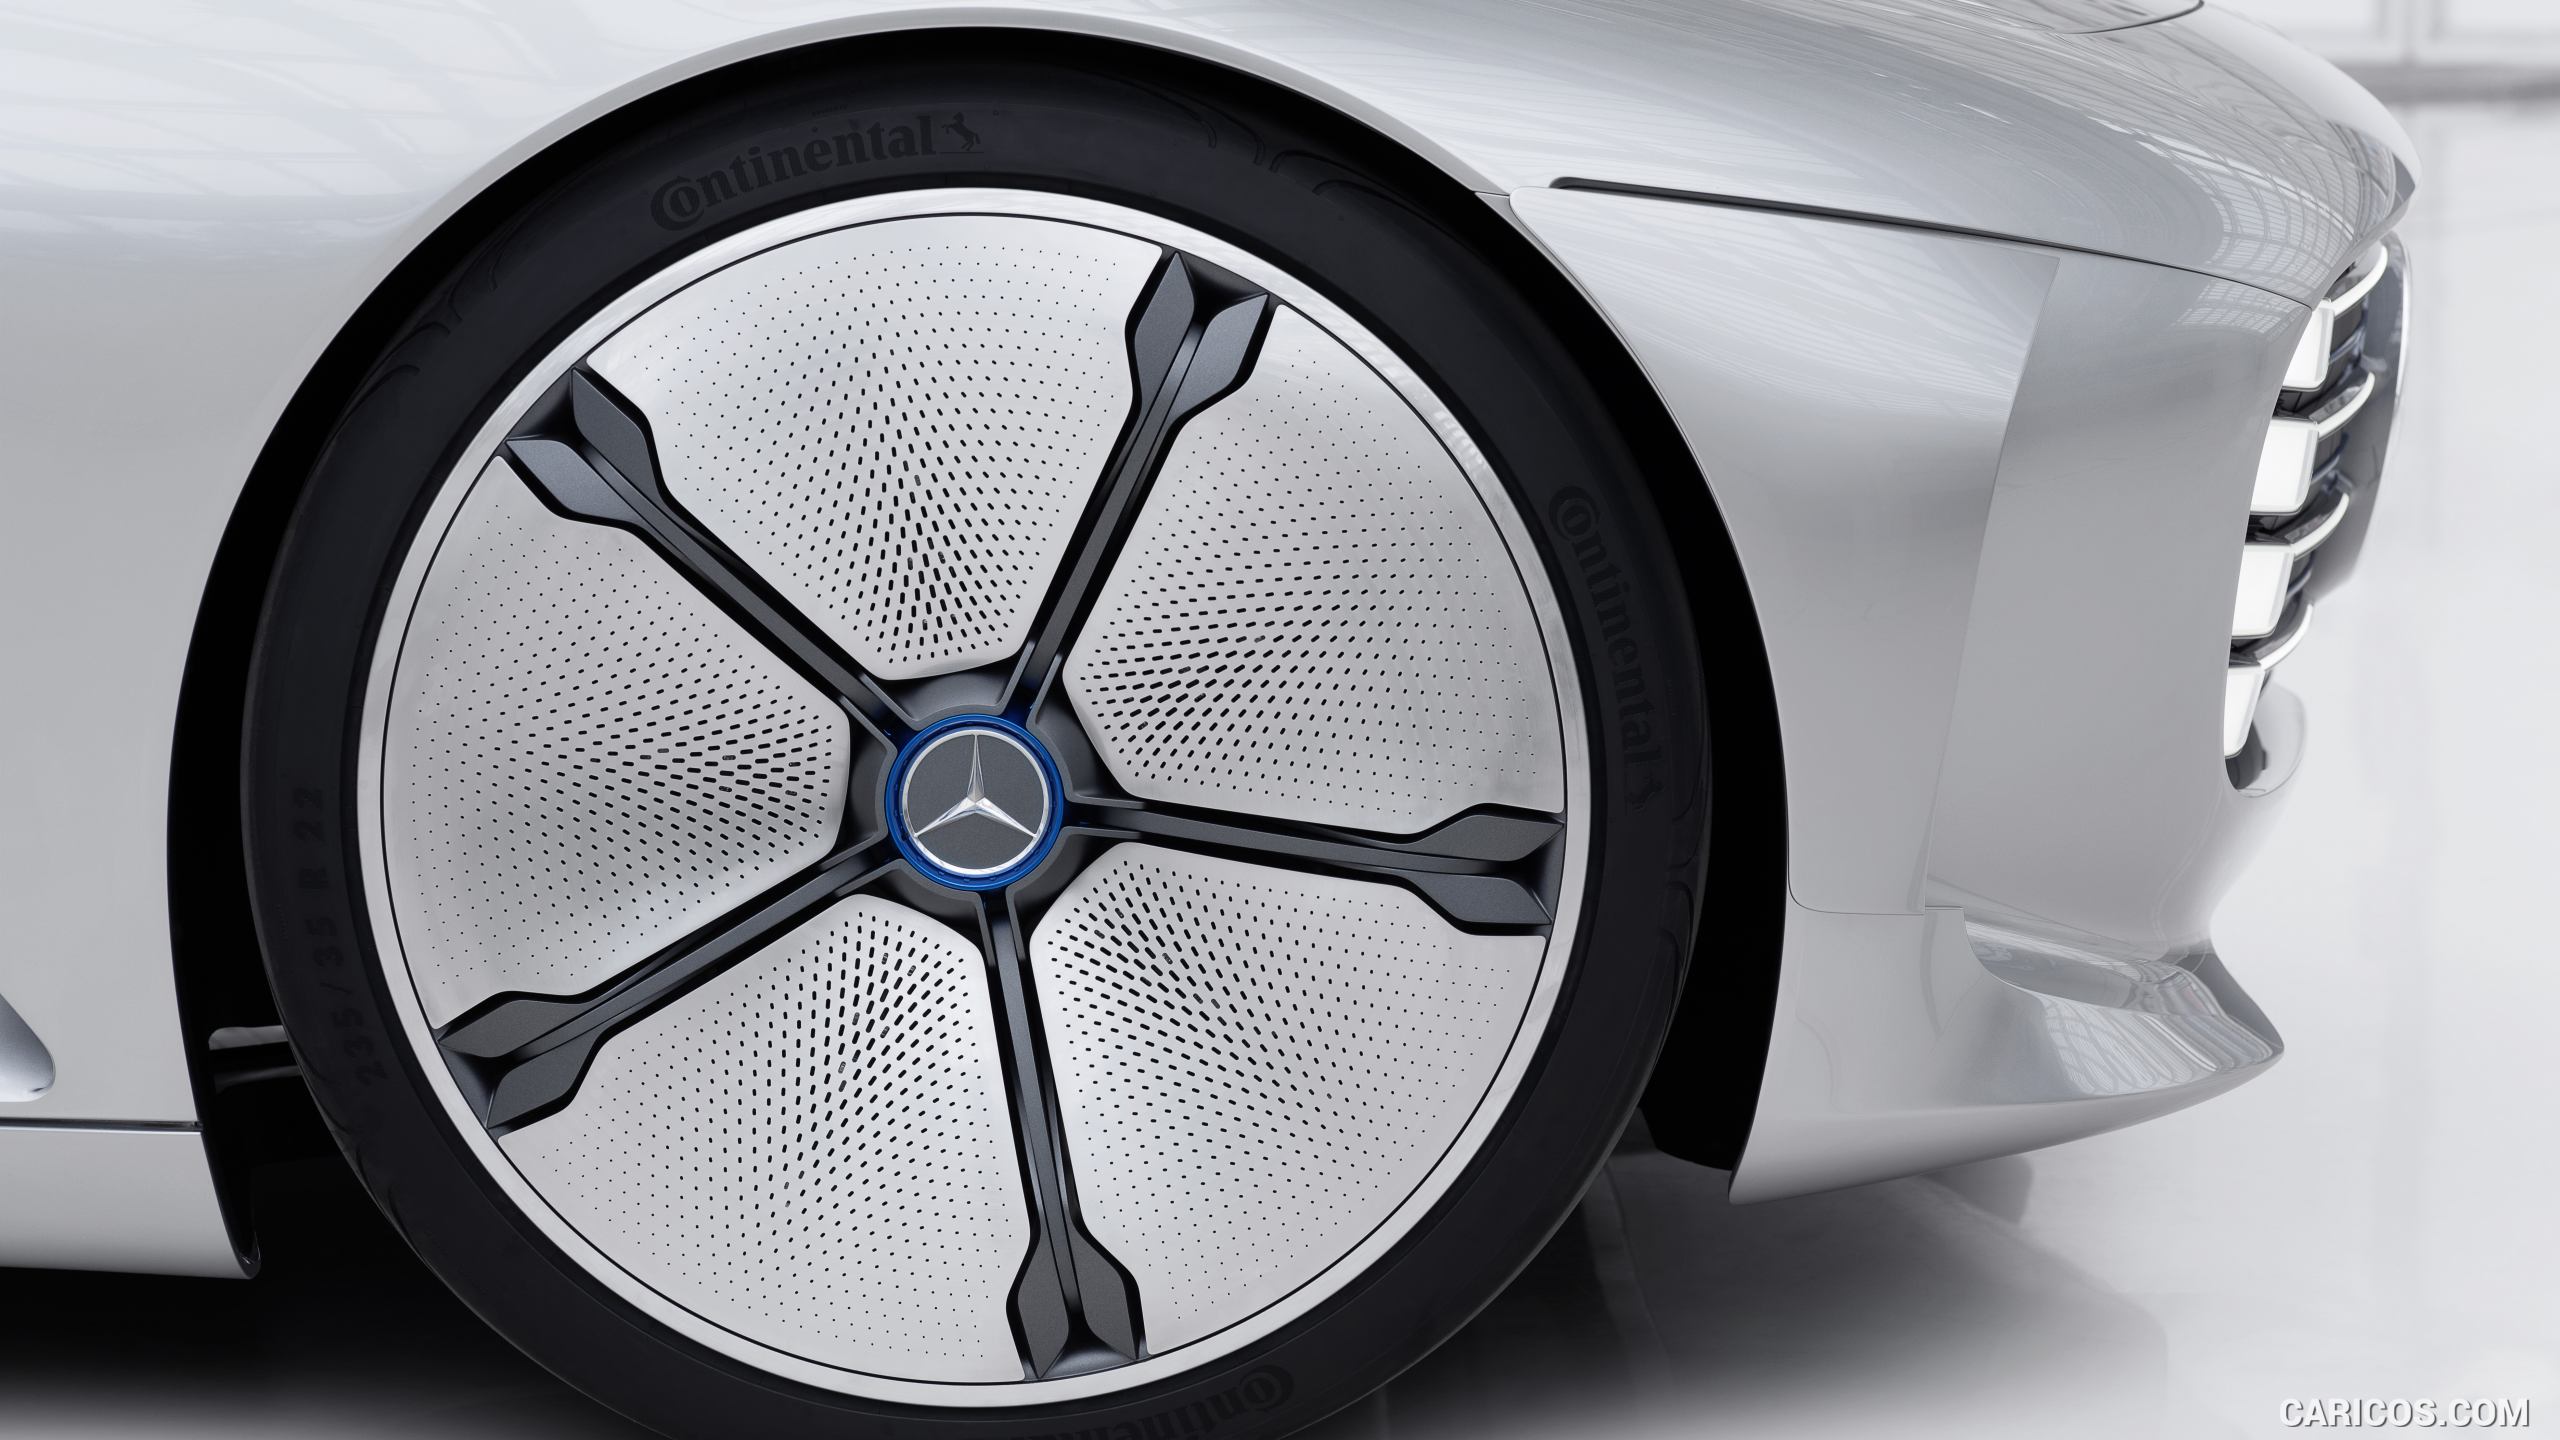 2015 Mercedes-Benz Concept IAA (Intelligent Aerodynamic Automobile) - Wheel, #39 of 49